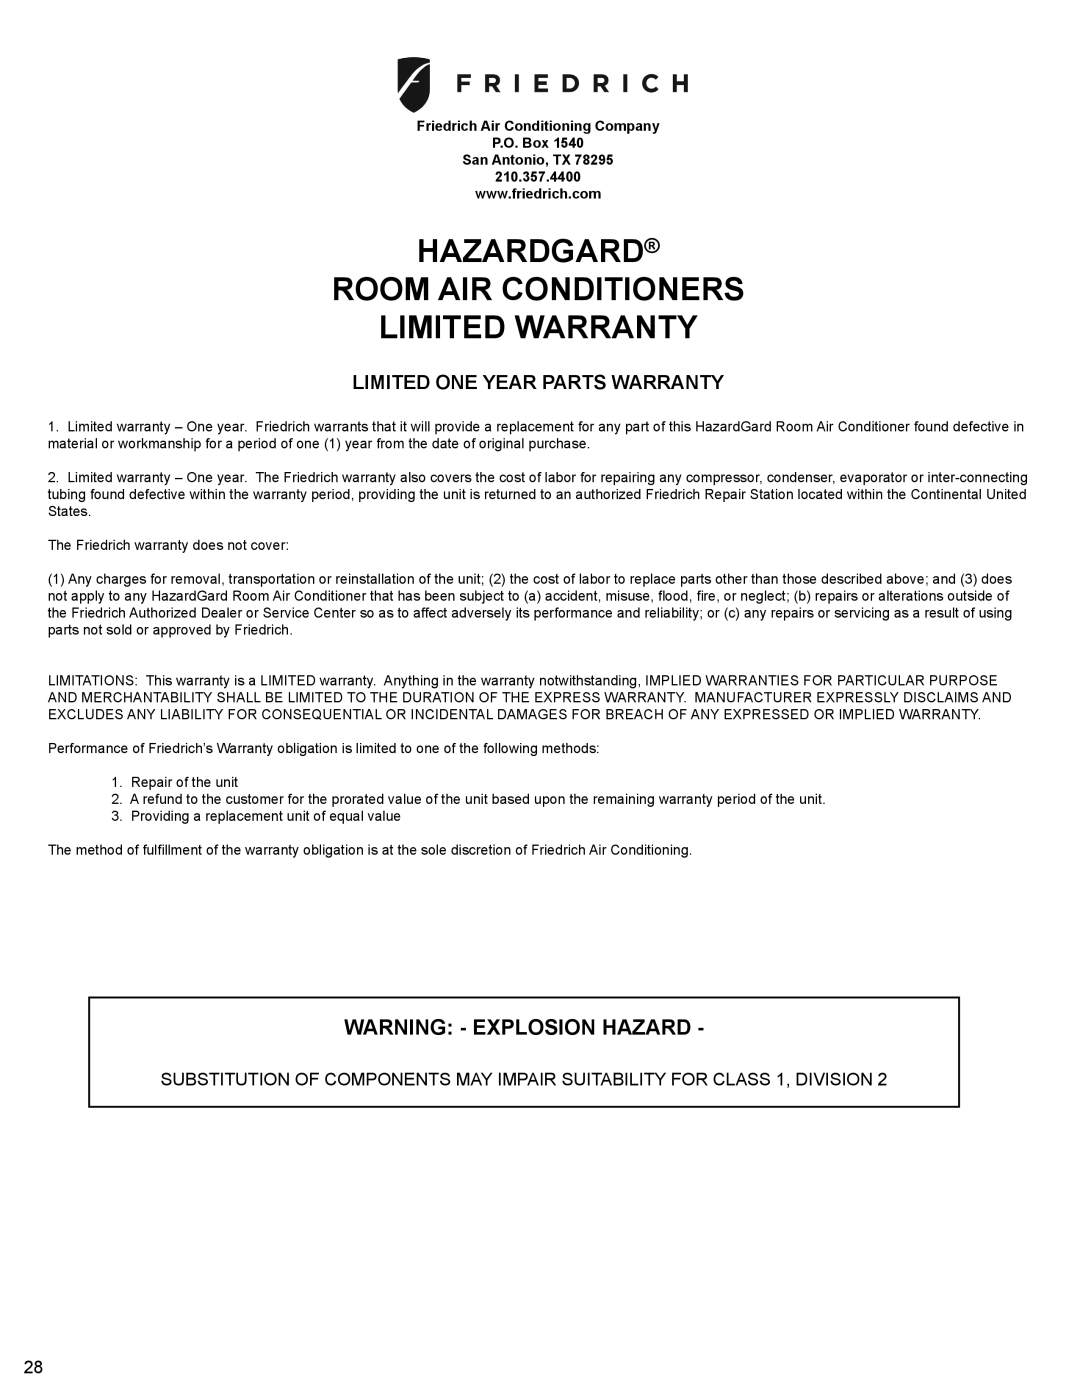 Friedrich R-410A service manual Hazardgard Room Air Conditioners Limited Warranty, Warning - Explosion Hazard 